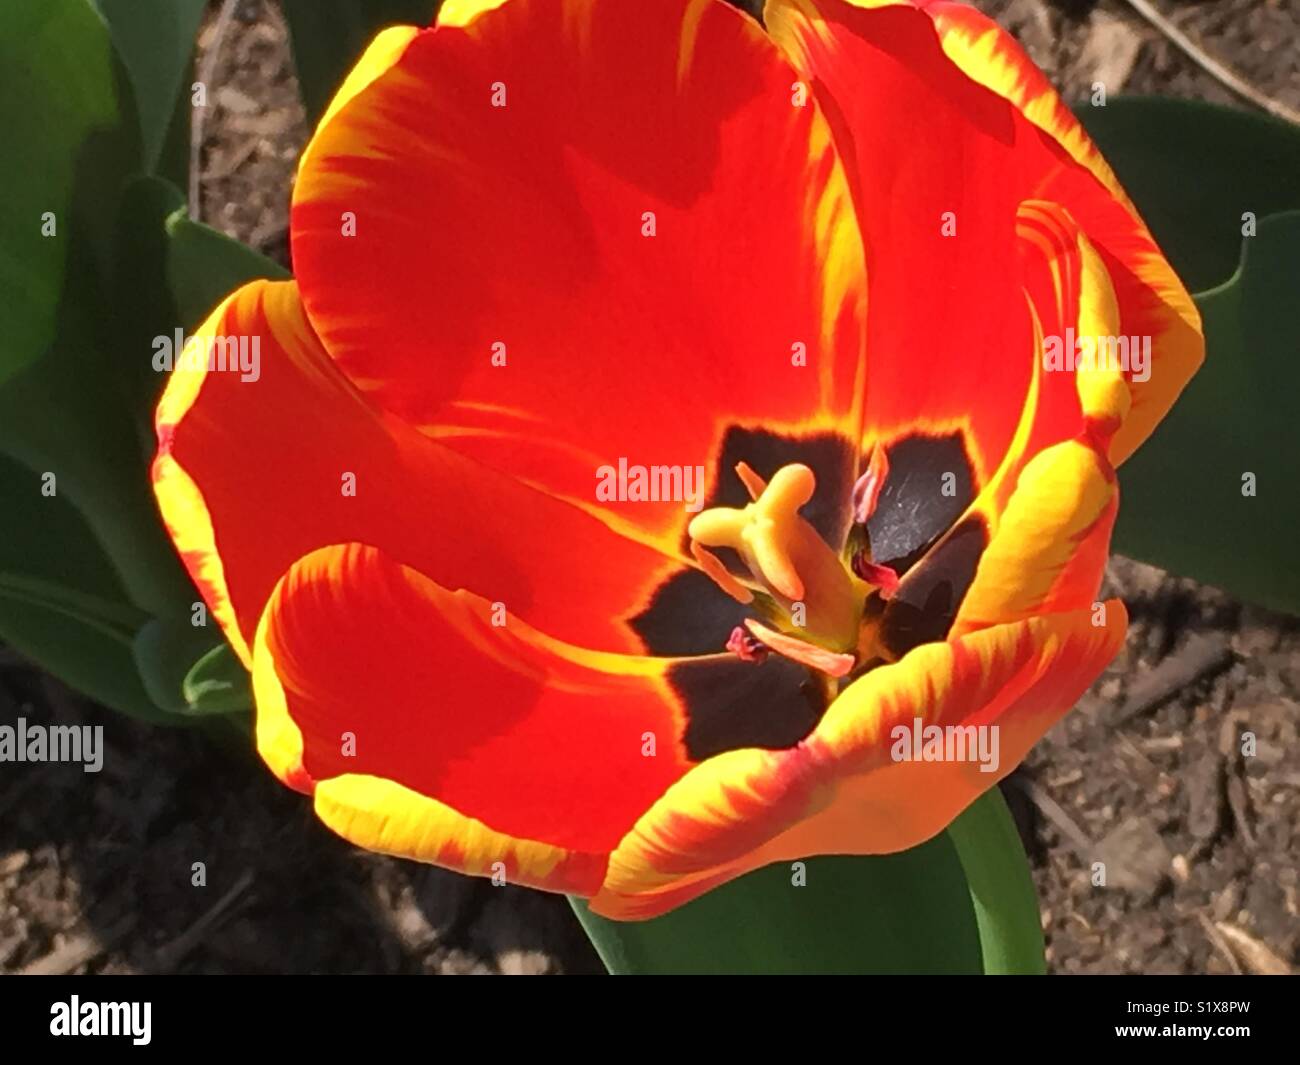 Red and yellow tulip taken at the Missouri Botanical Garden. Stock Photo